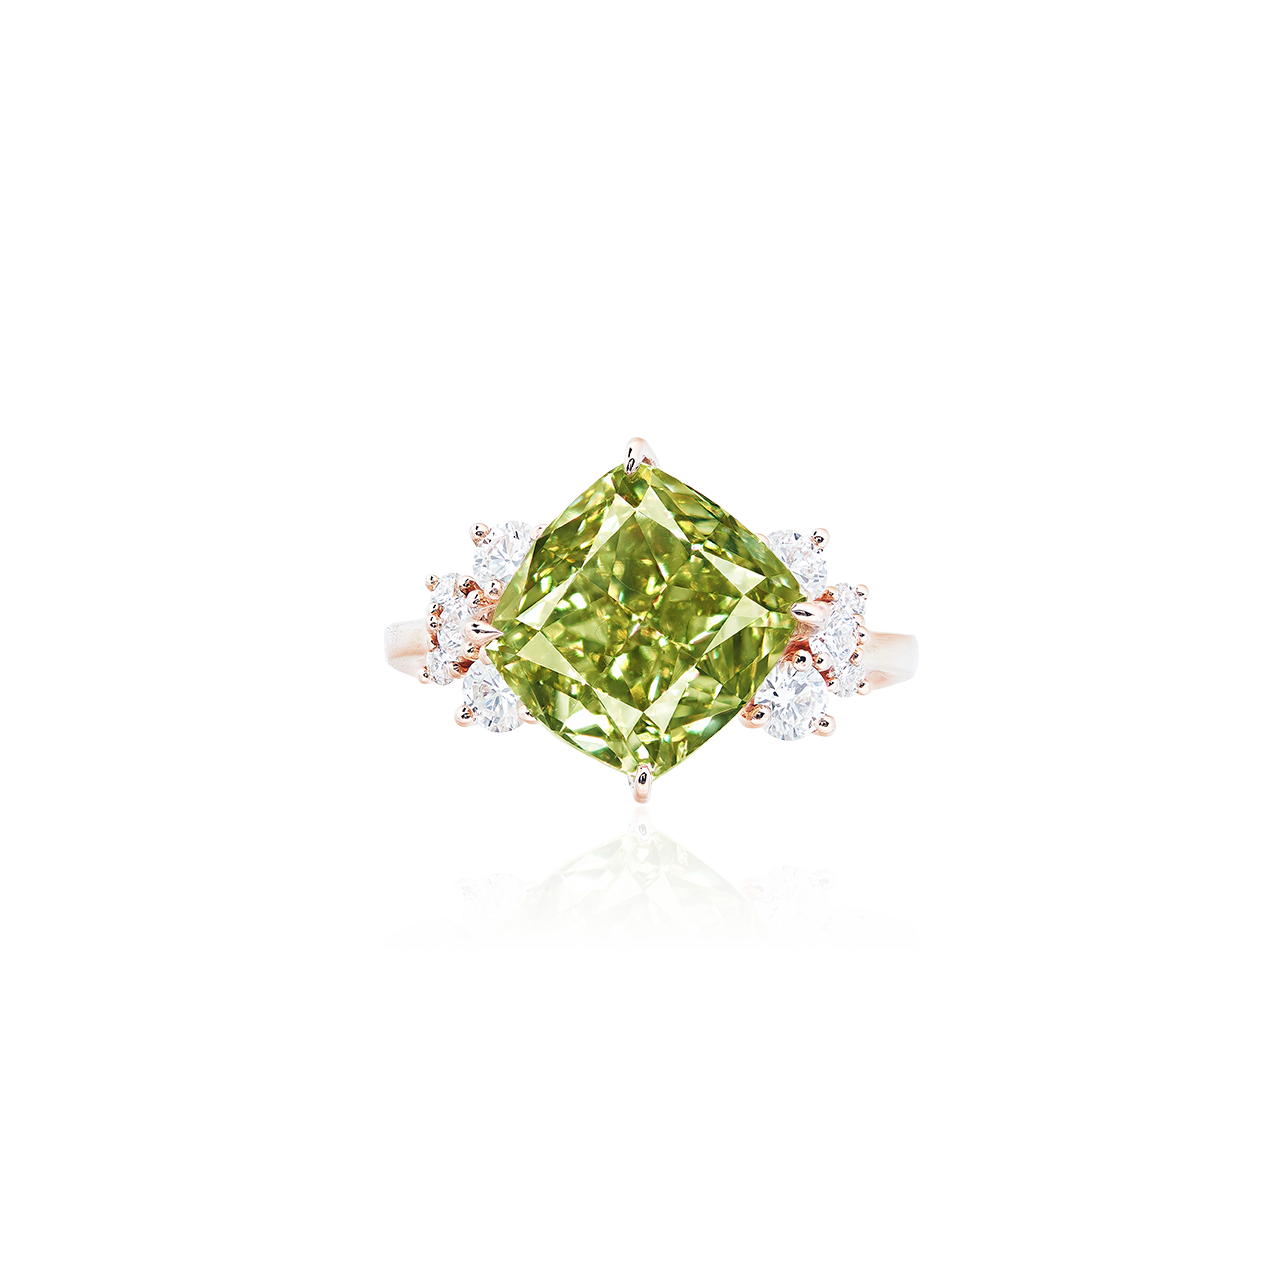 GIA 5.02克拉 深彩黃綠彩鑽鑽石戒
FANCY DEEP GRAYISH YELLOWISH 
GREEN COLOURED DIAMOND AND DIAMOND RING